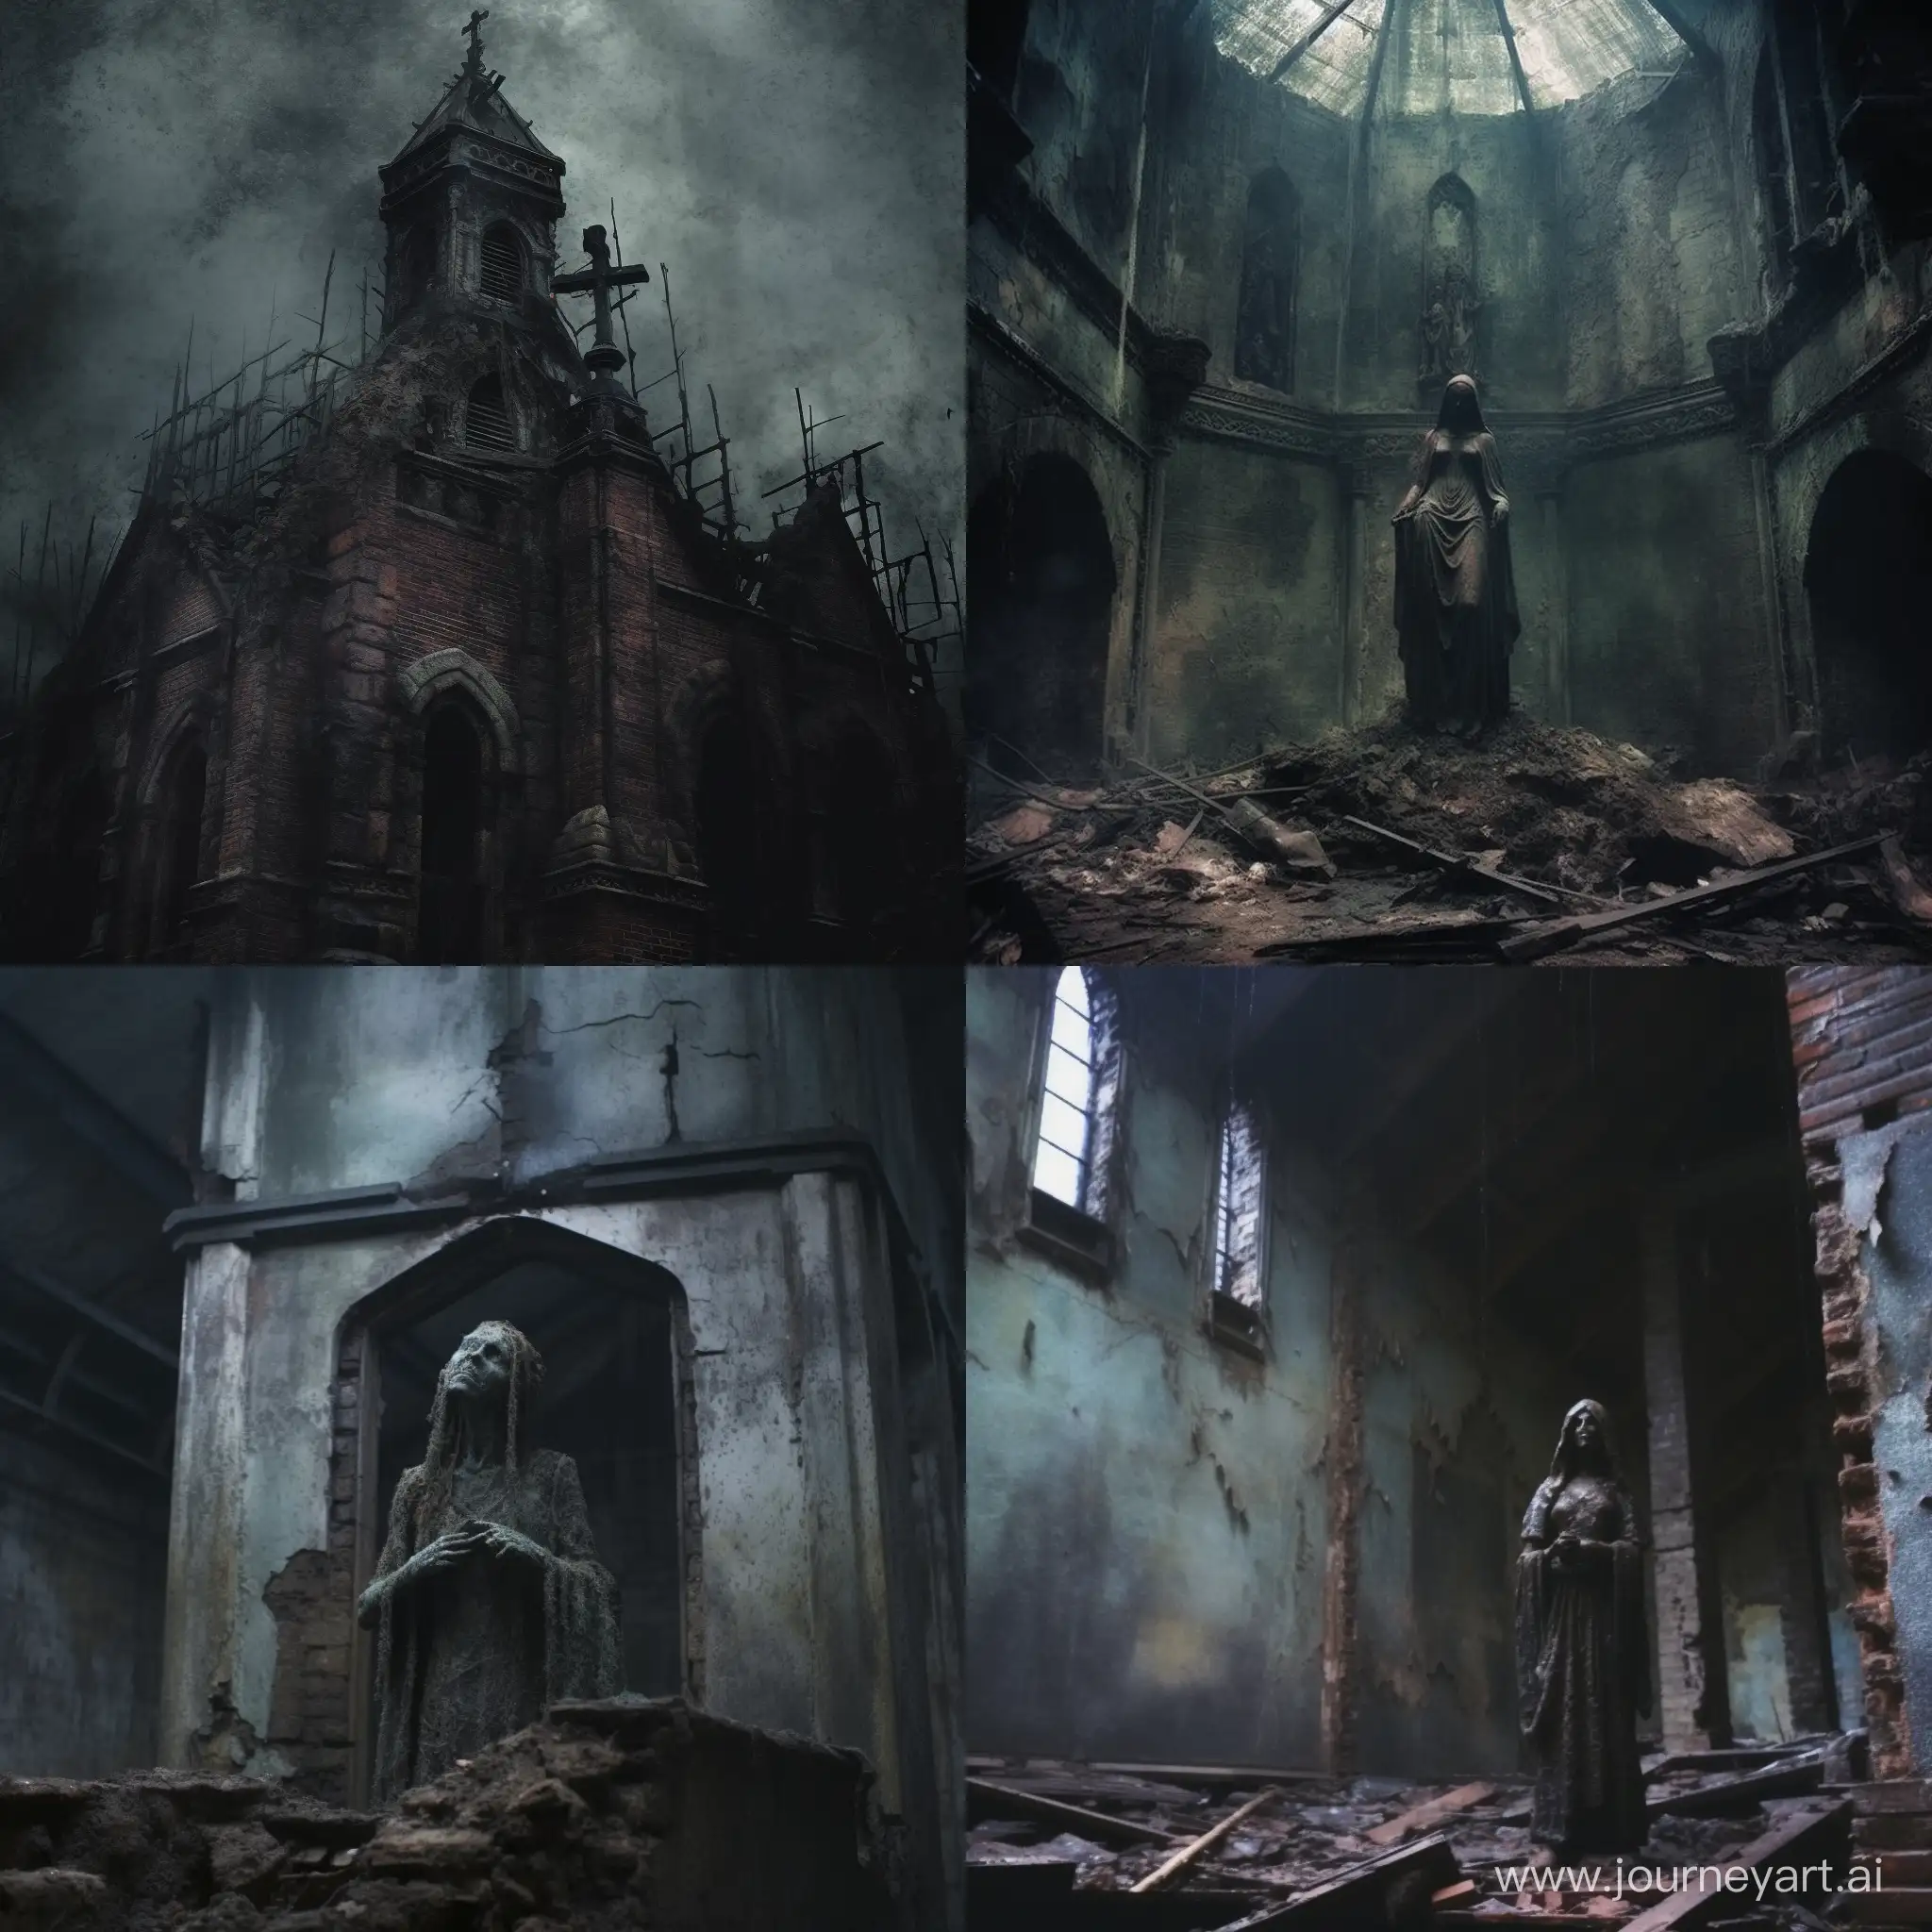 Decrepit-Abandoned-Church-in-Beksinski-Style